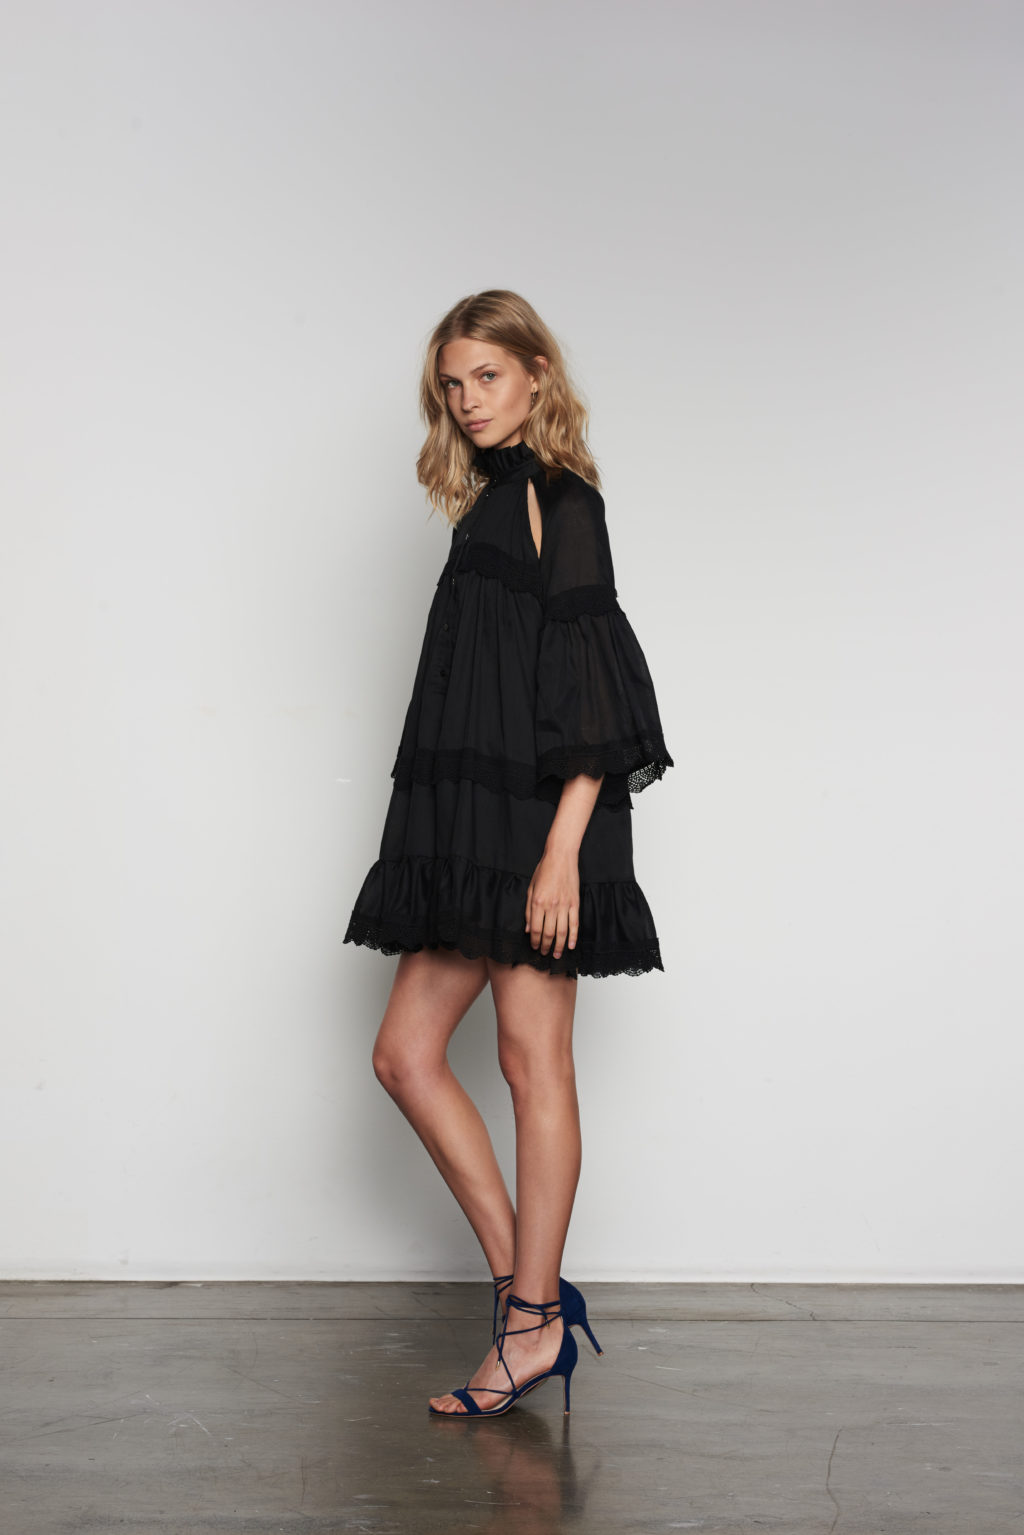 Dark Shadow Dress | The Style Capsule